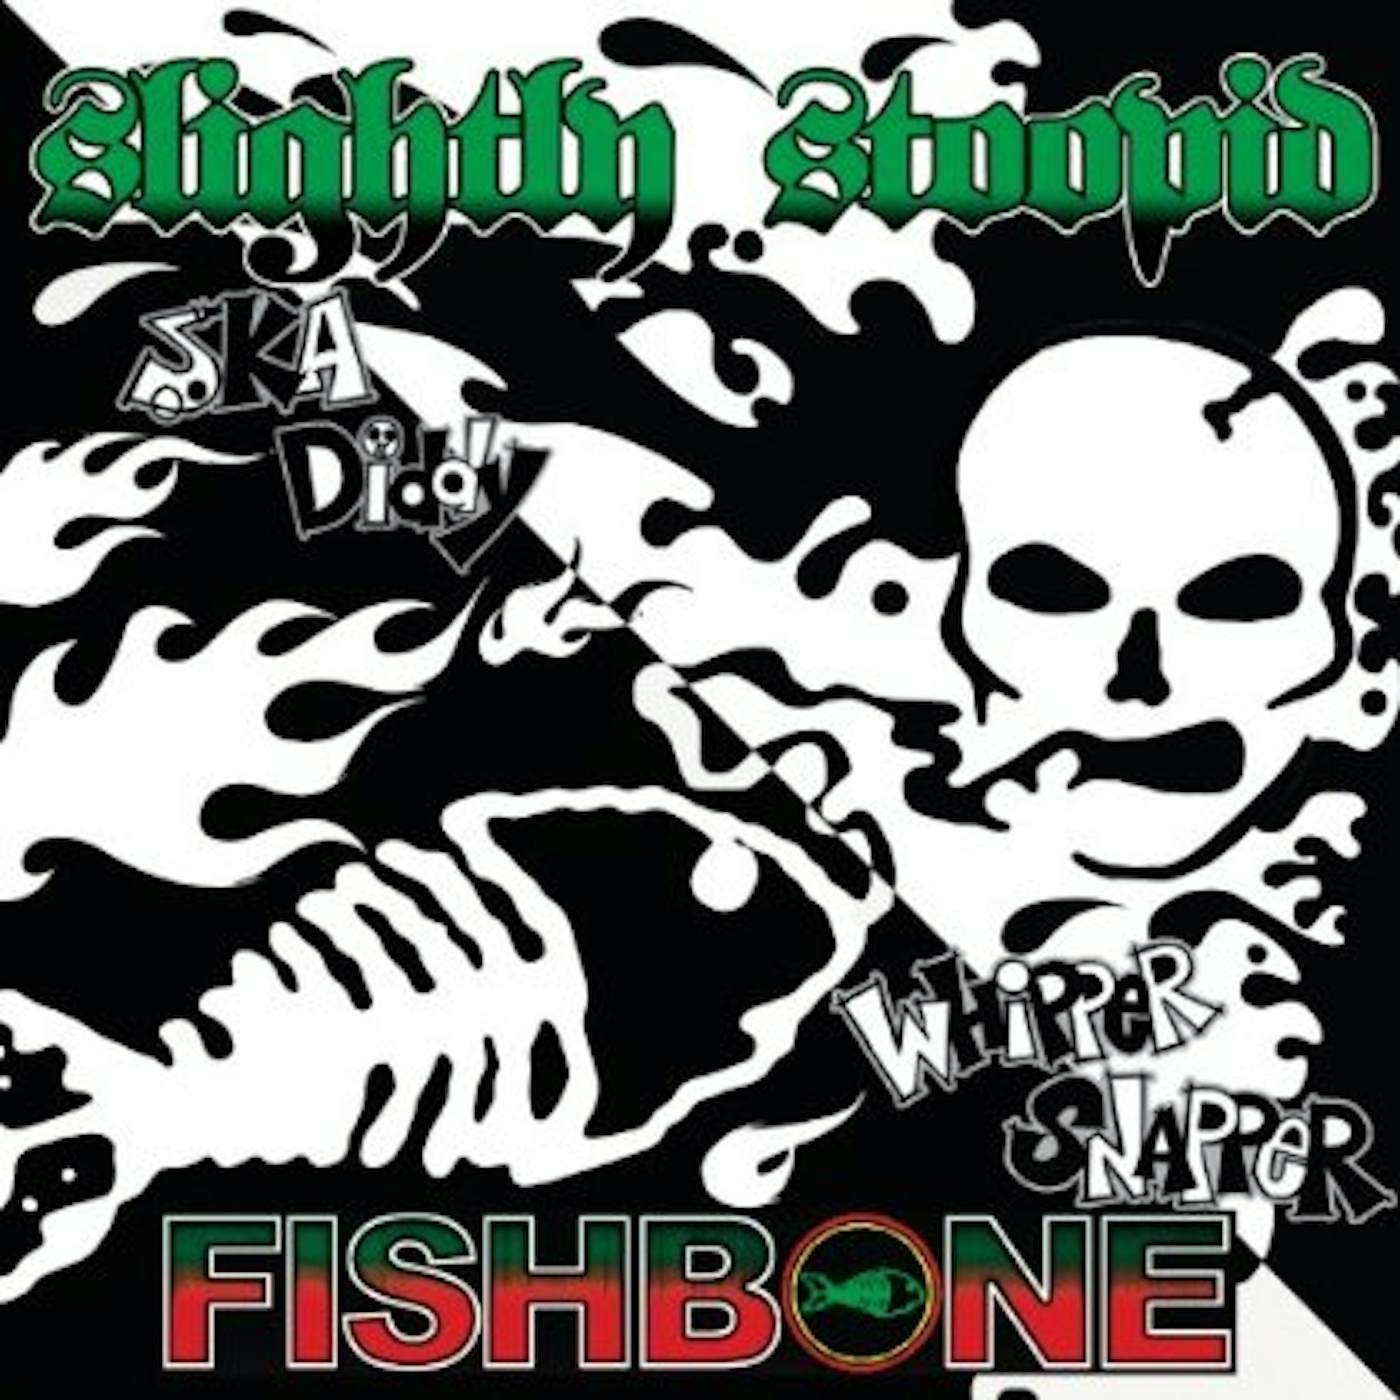 Fishbone WHIPPER SNAPPER / SKA DIDDY Vinyl Record